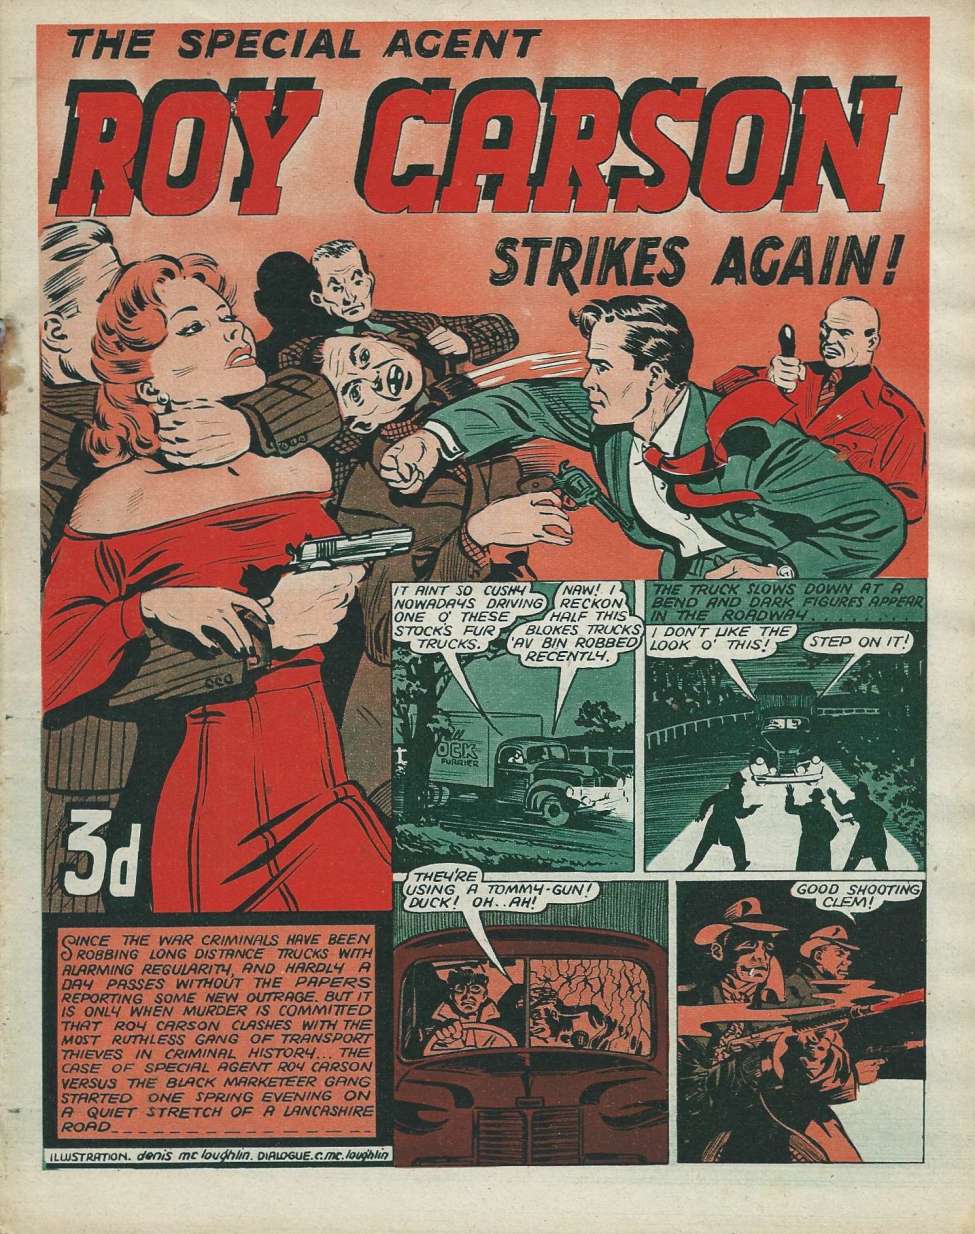 Comic Book Cover For Roy Carson 4 (Strikes Again)